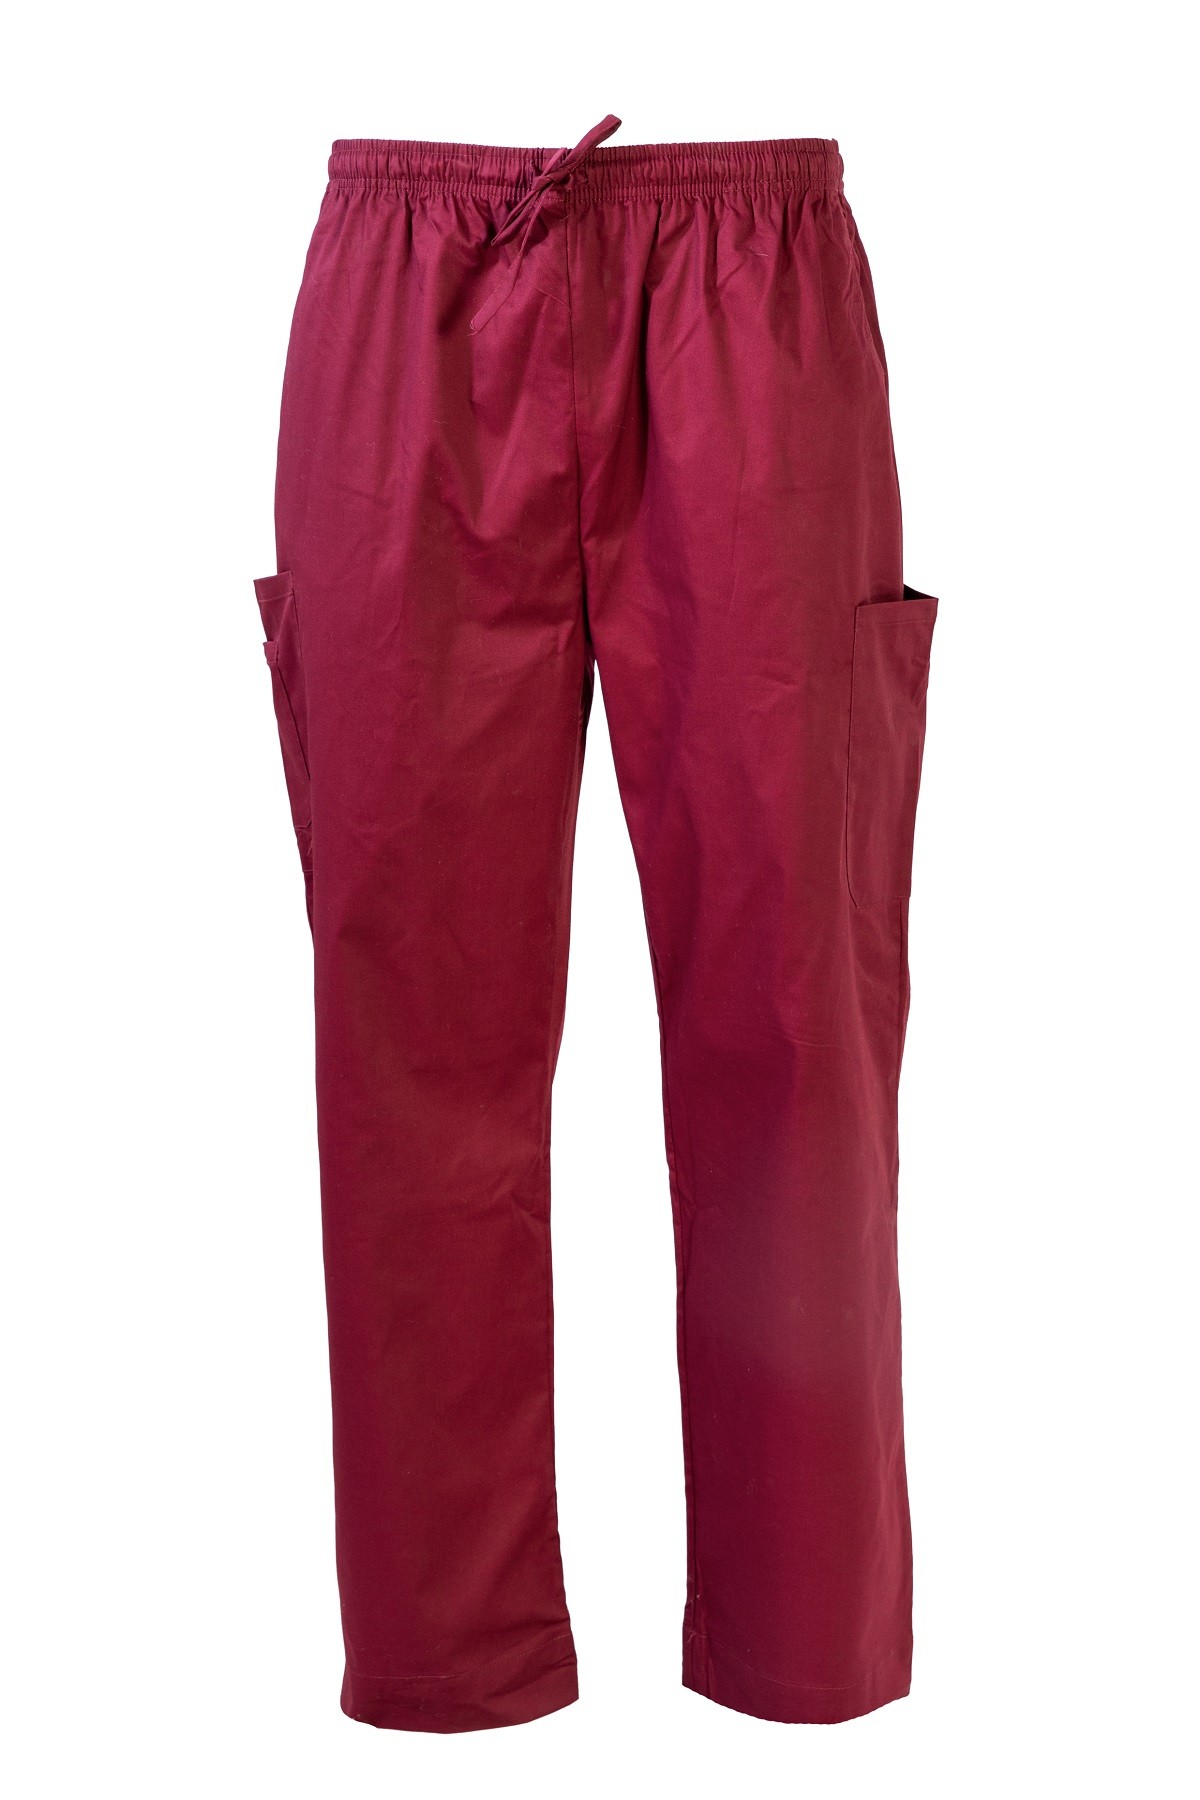 The Lab Coat Company - Classic Maroon Scrubs Pants - Scrubs